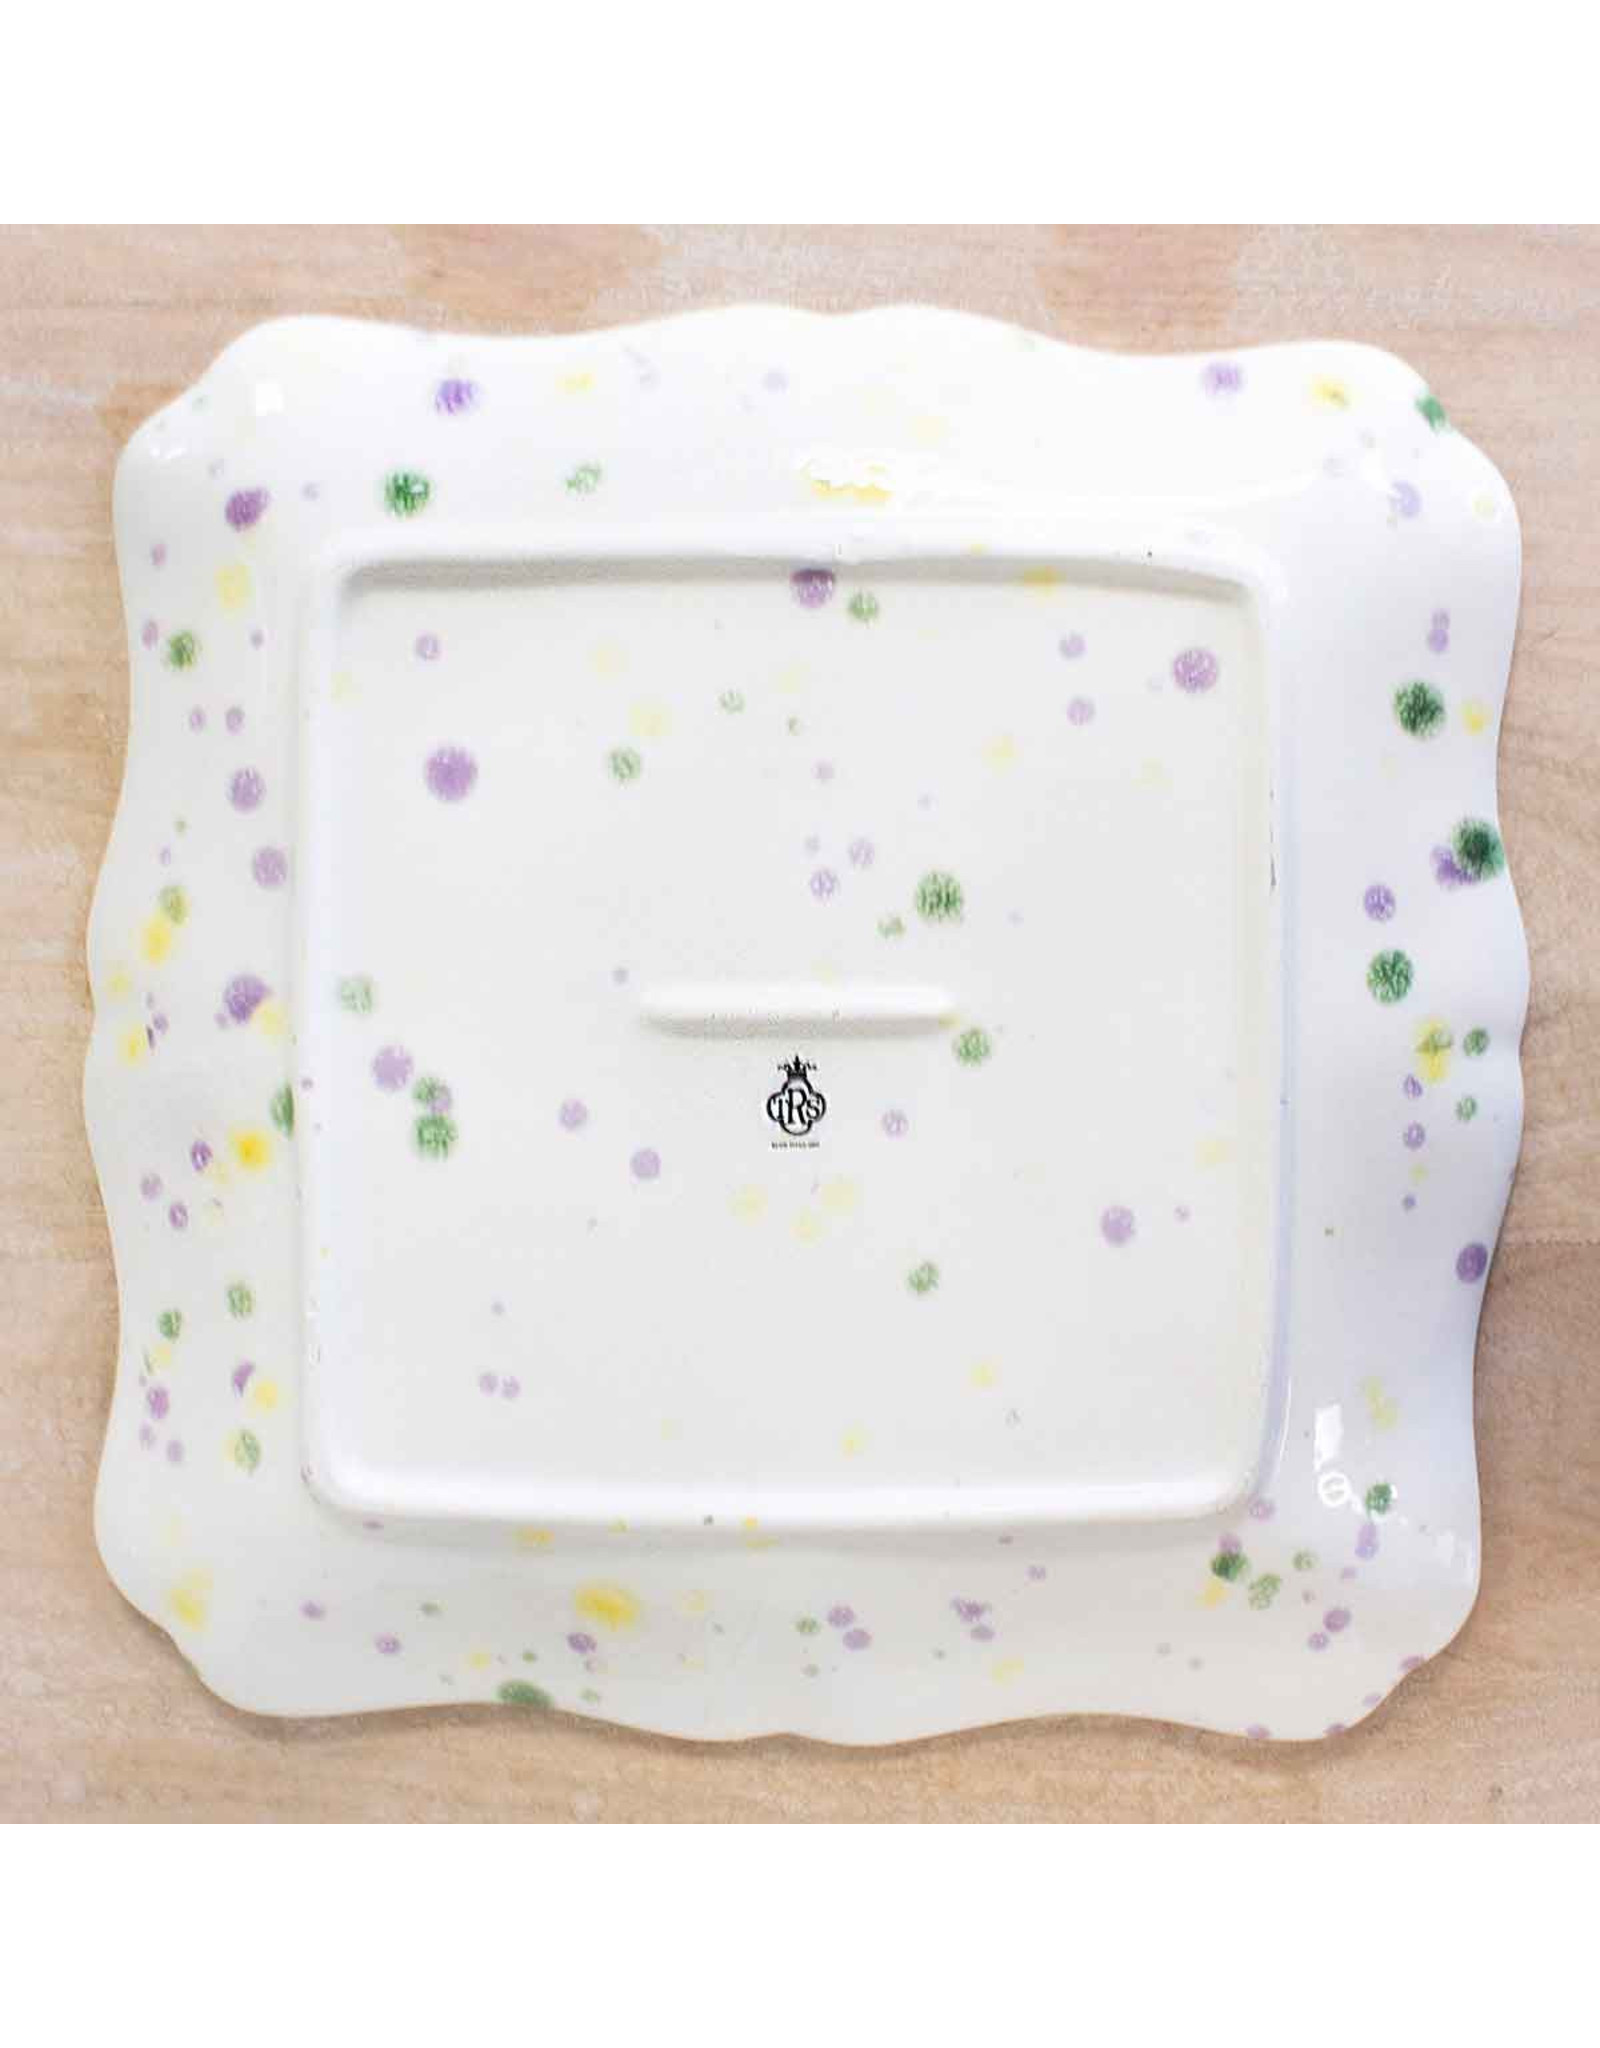 The Royal Standard Watercolor Fleur de Lis Platter in Mardi Gras Colors